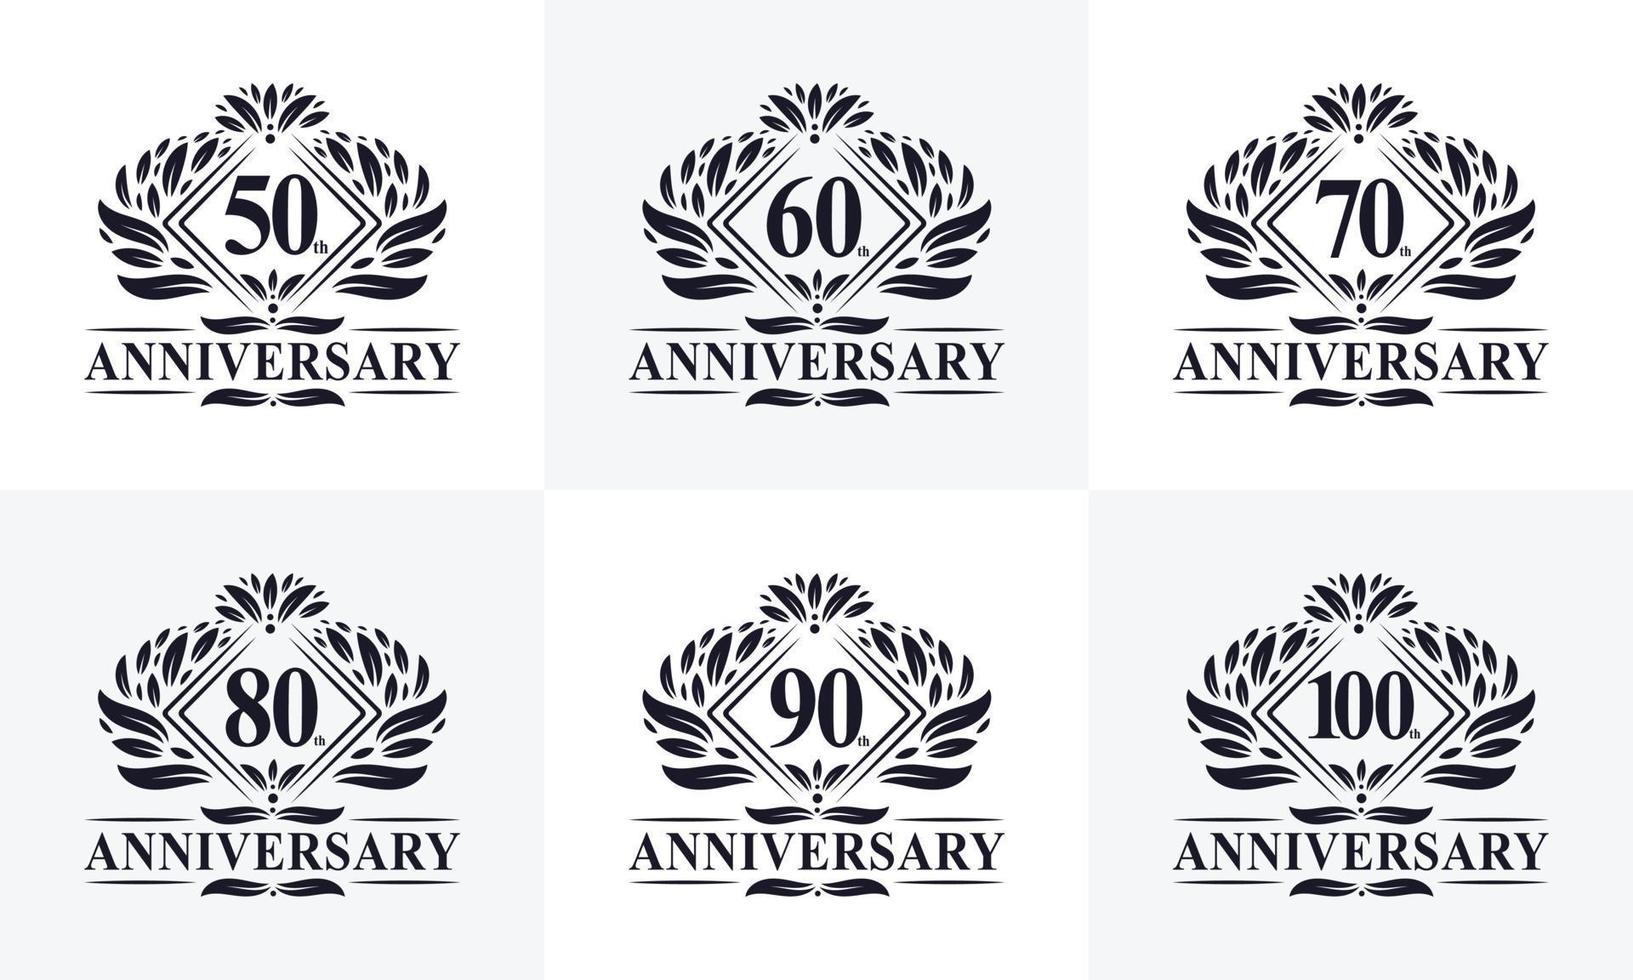 conjunto de logotipo de aniversário retrô vintage. luxuoso pacote de logotipo de aniversário dourado. 50º, 60º, 70º, 80º, 90º, 100º pacote de logotipo de feliz aniversário. vetor